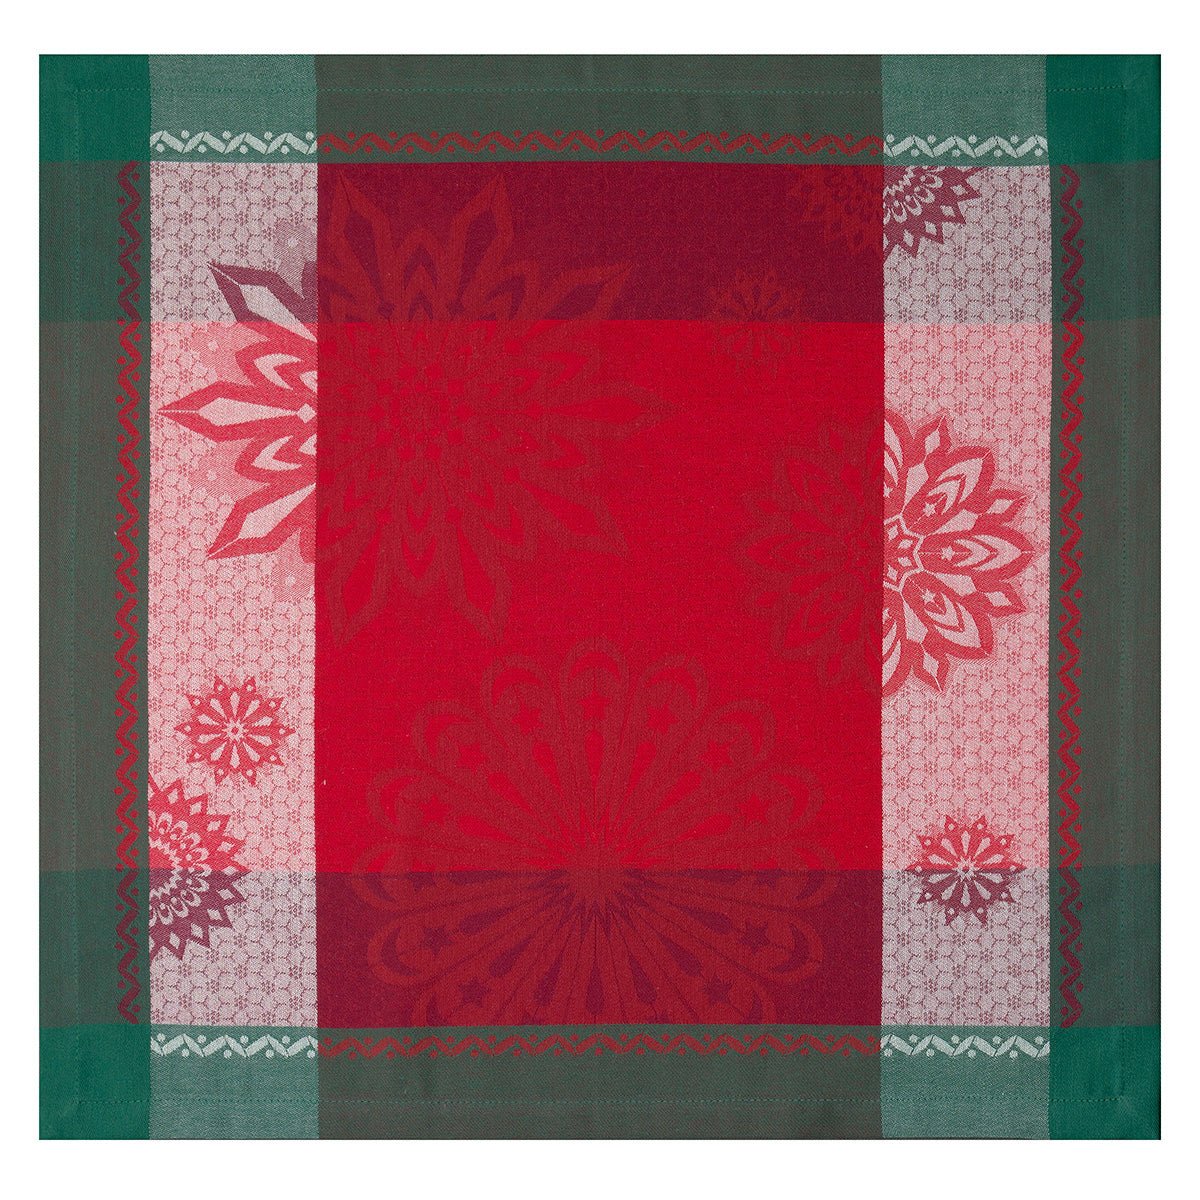 Cloth Napkin - lumière d'étoiles red holiday napkin by Le Jacquard Francais